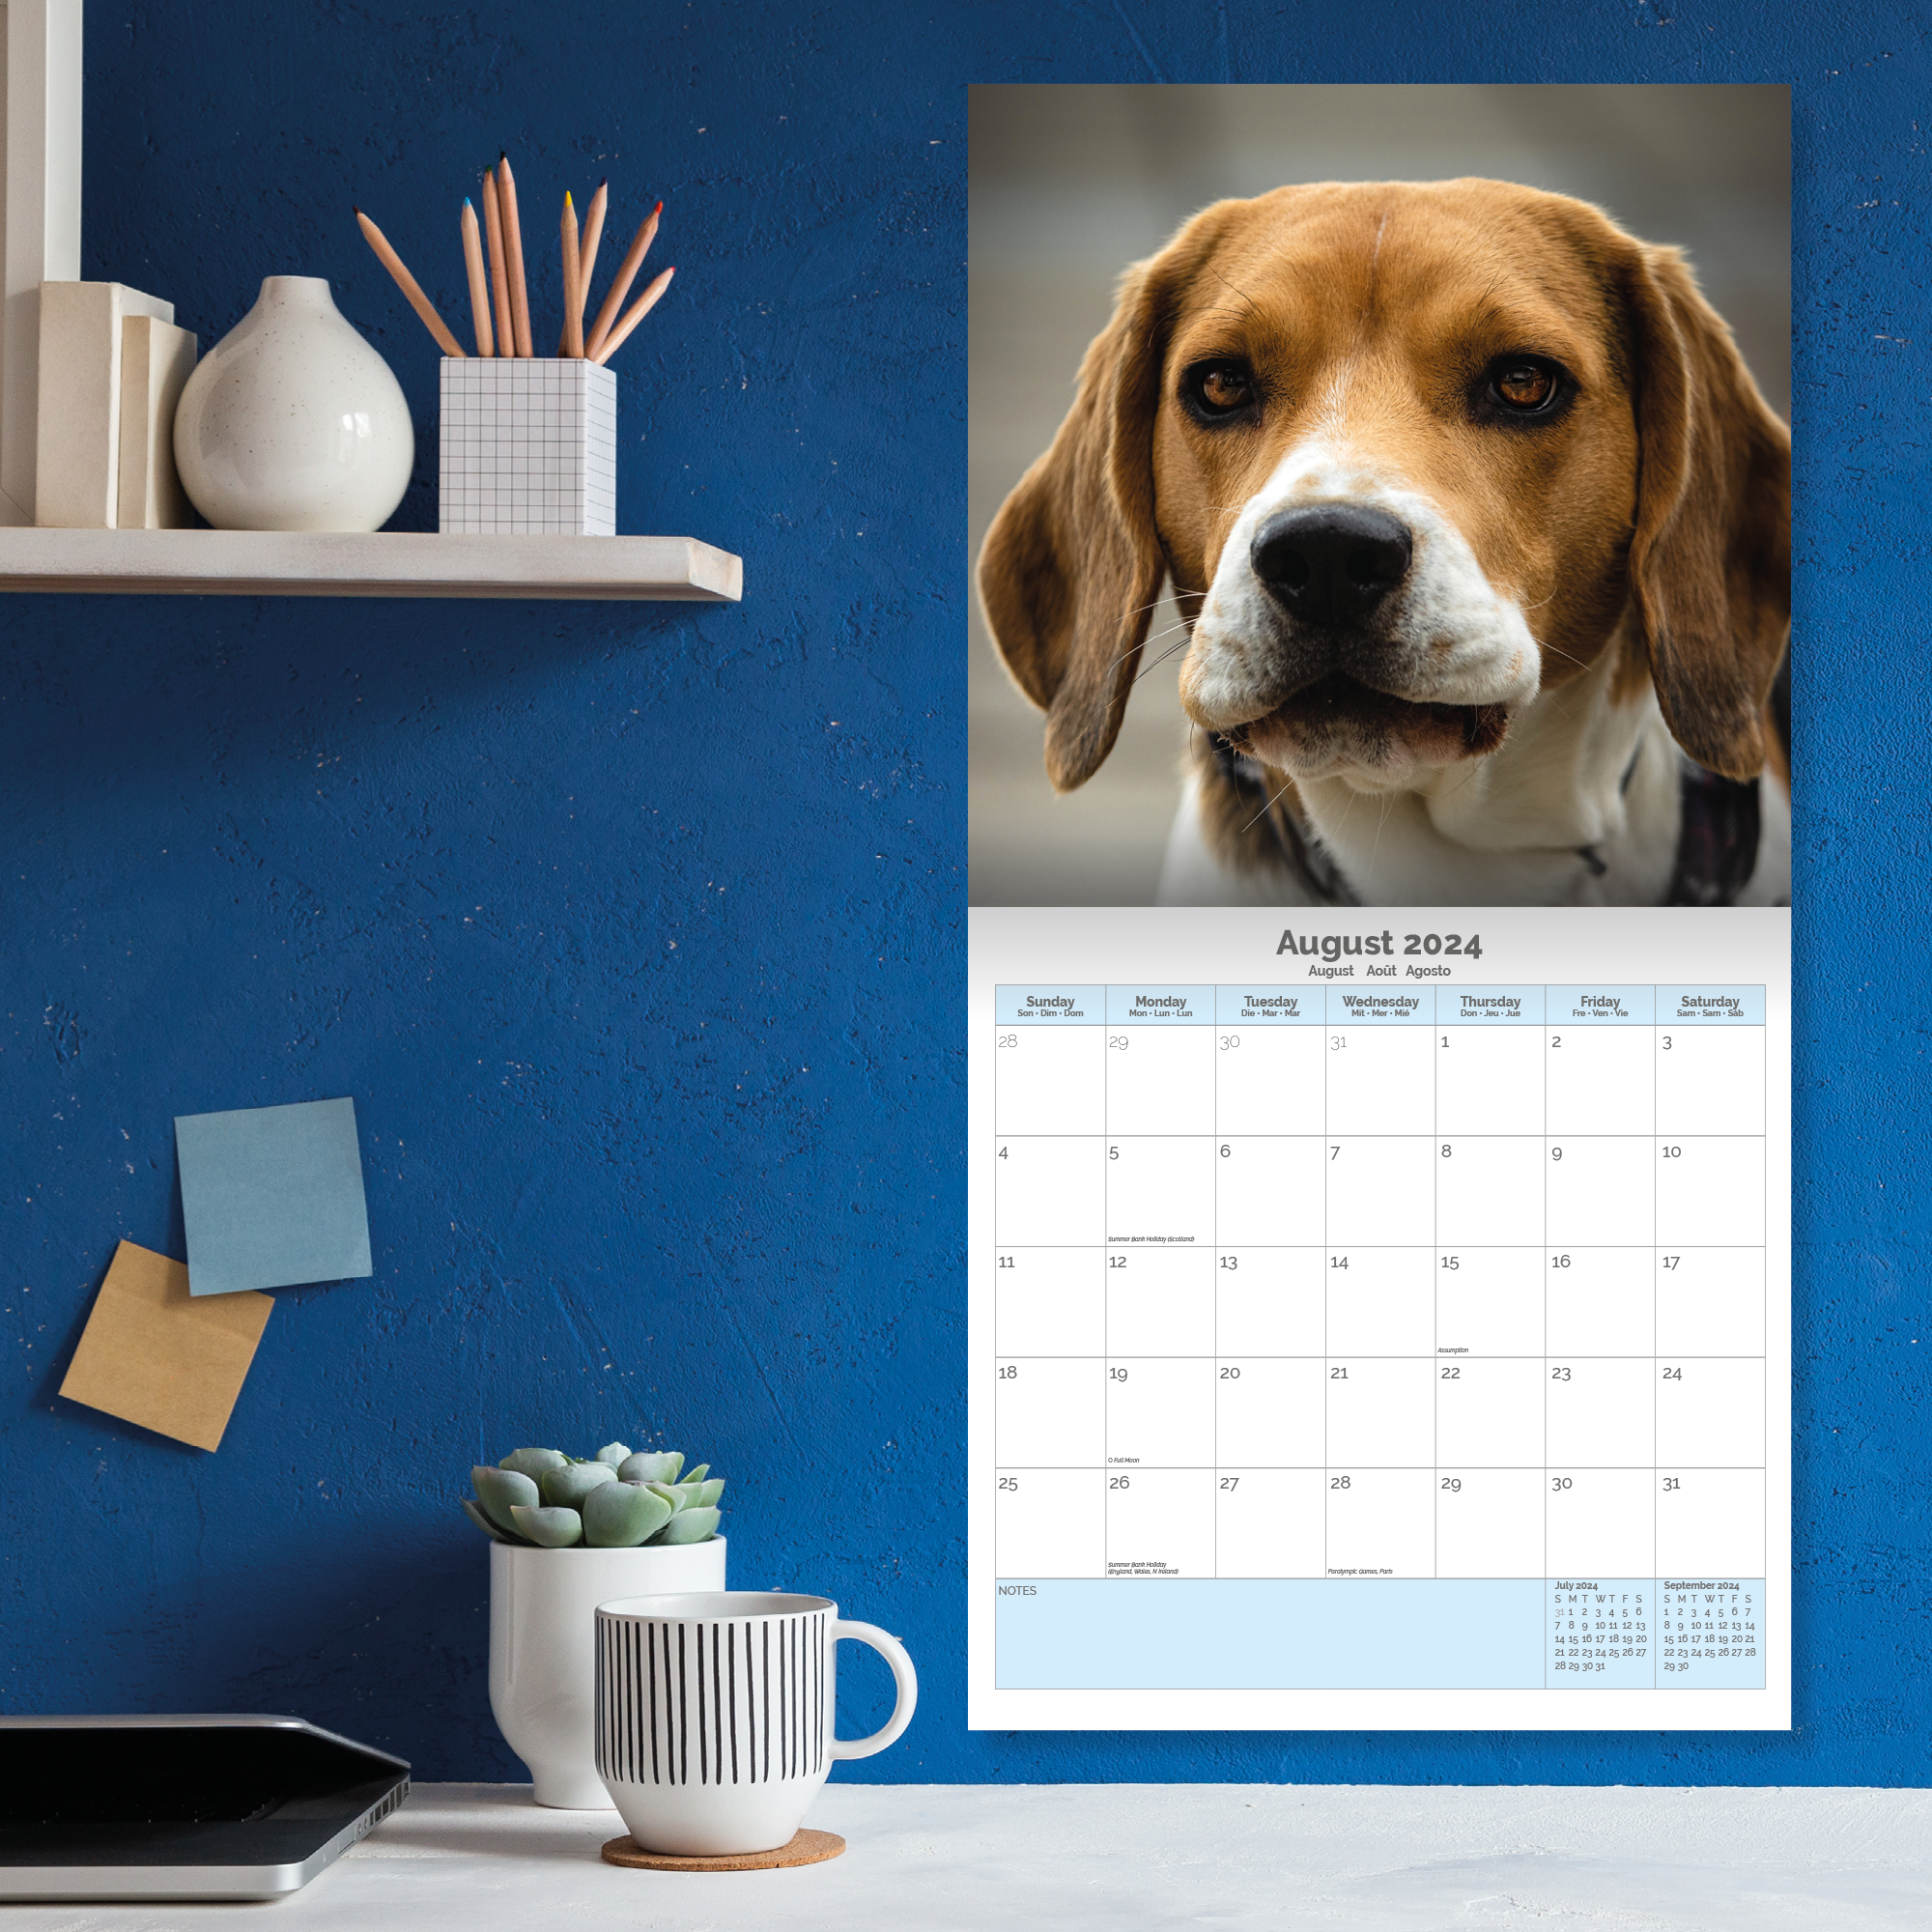 Beagle Calendar 2024